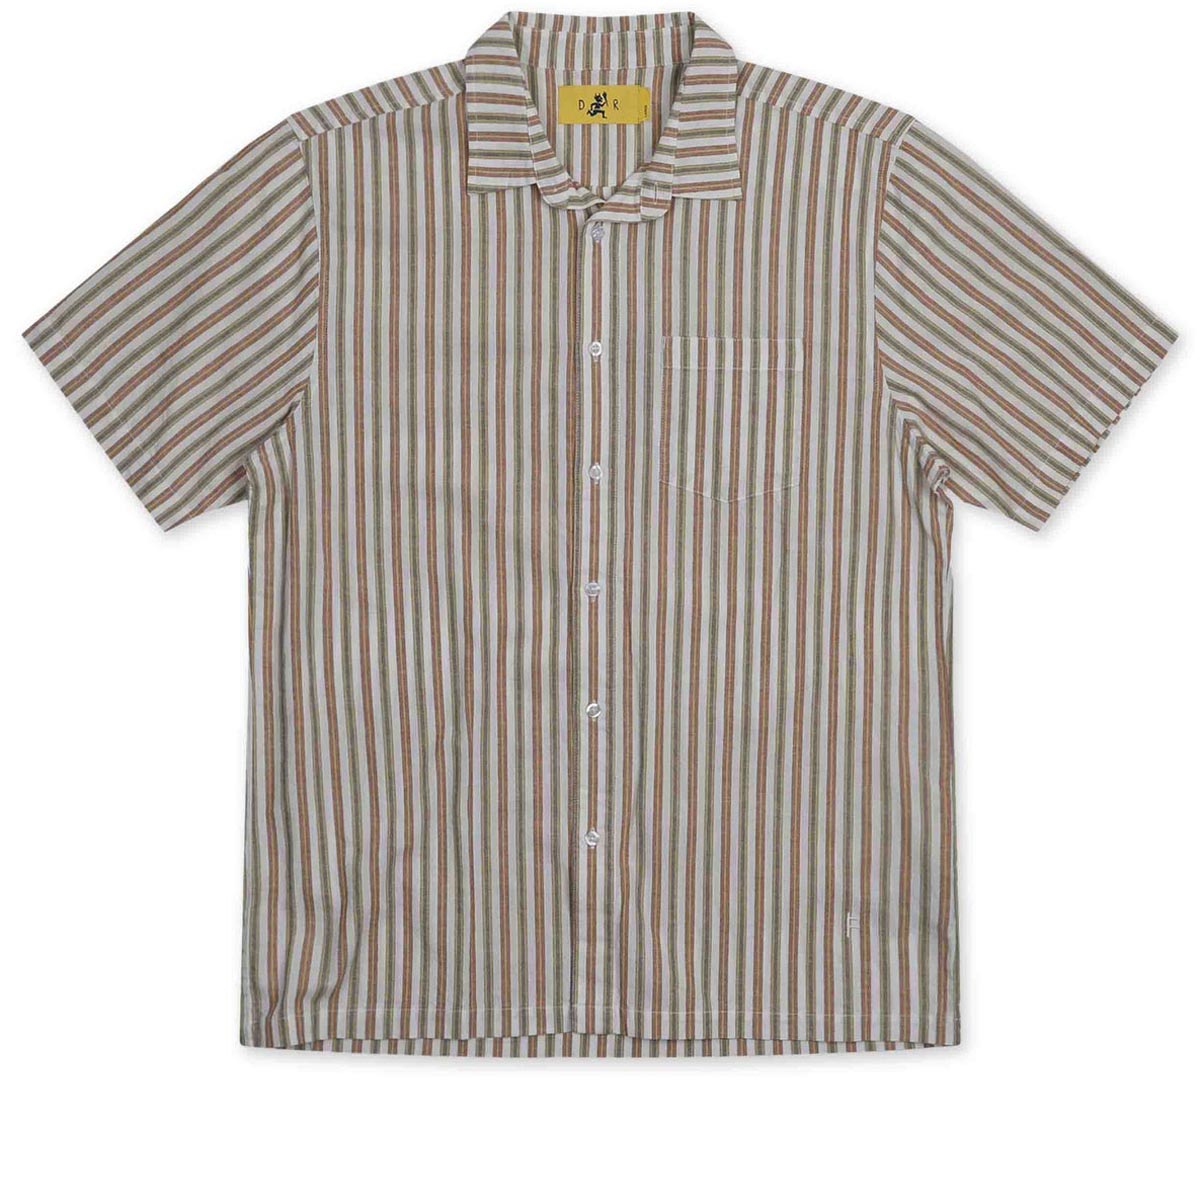 Former Reynolds Striped Shirt - Ochre image 3